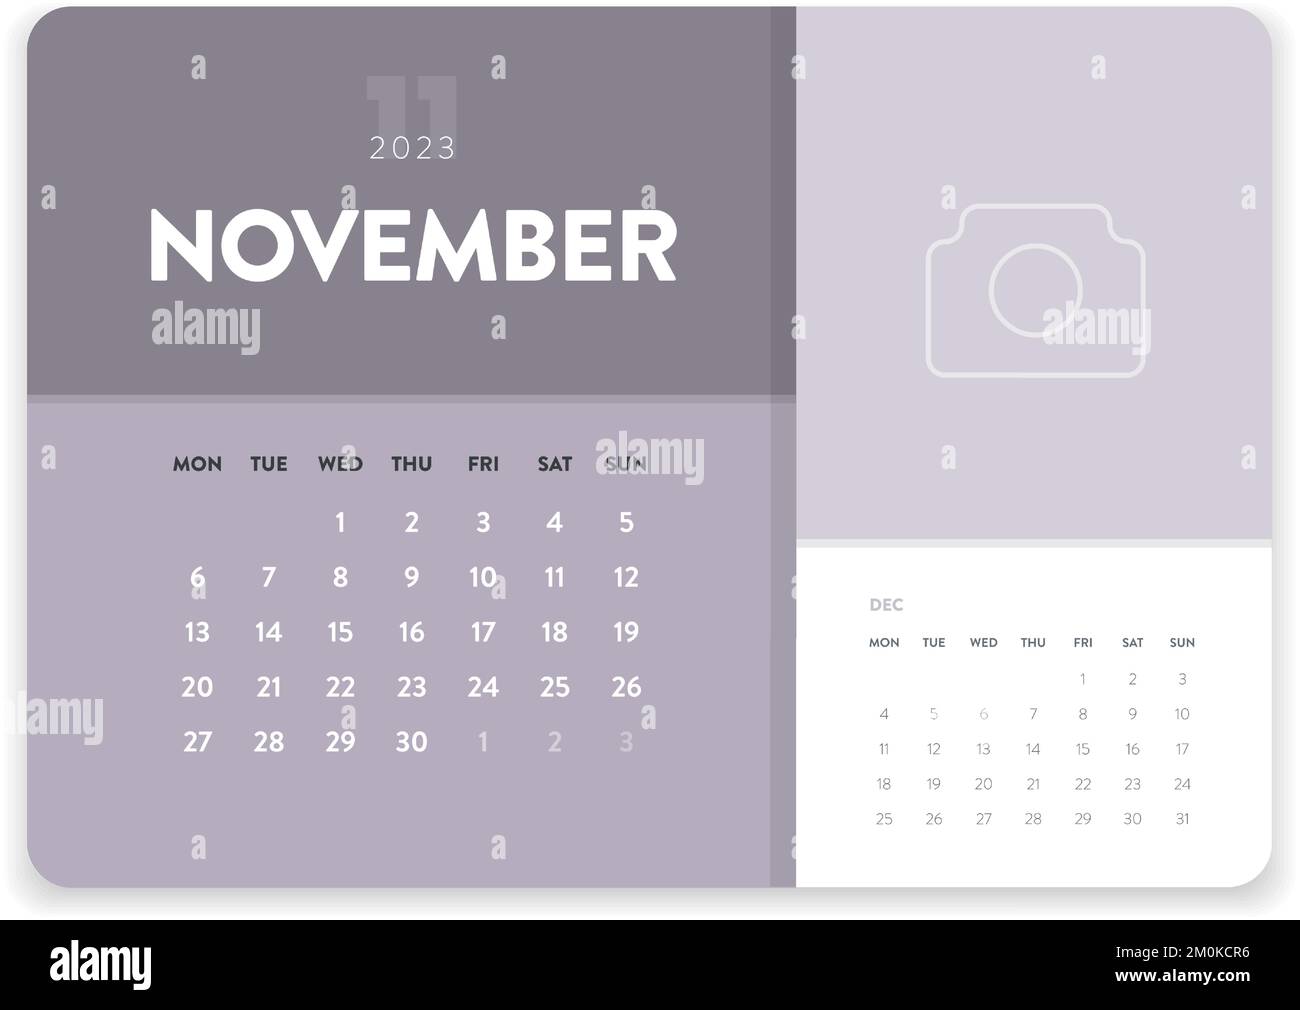 Daily wall calendar Imágenes recortadas de stock - Página 3 - Alamy